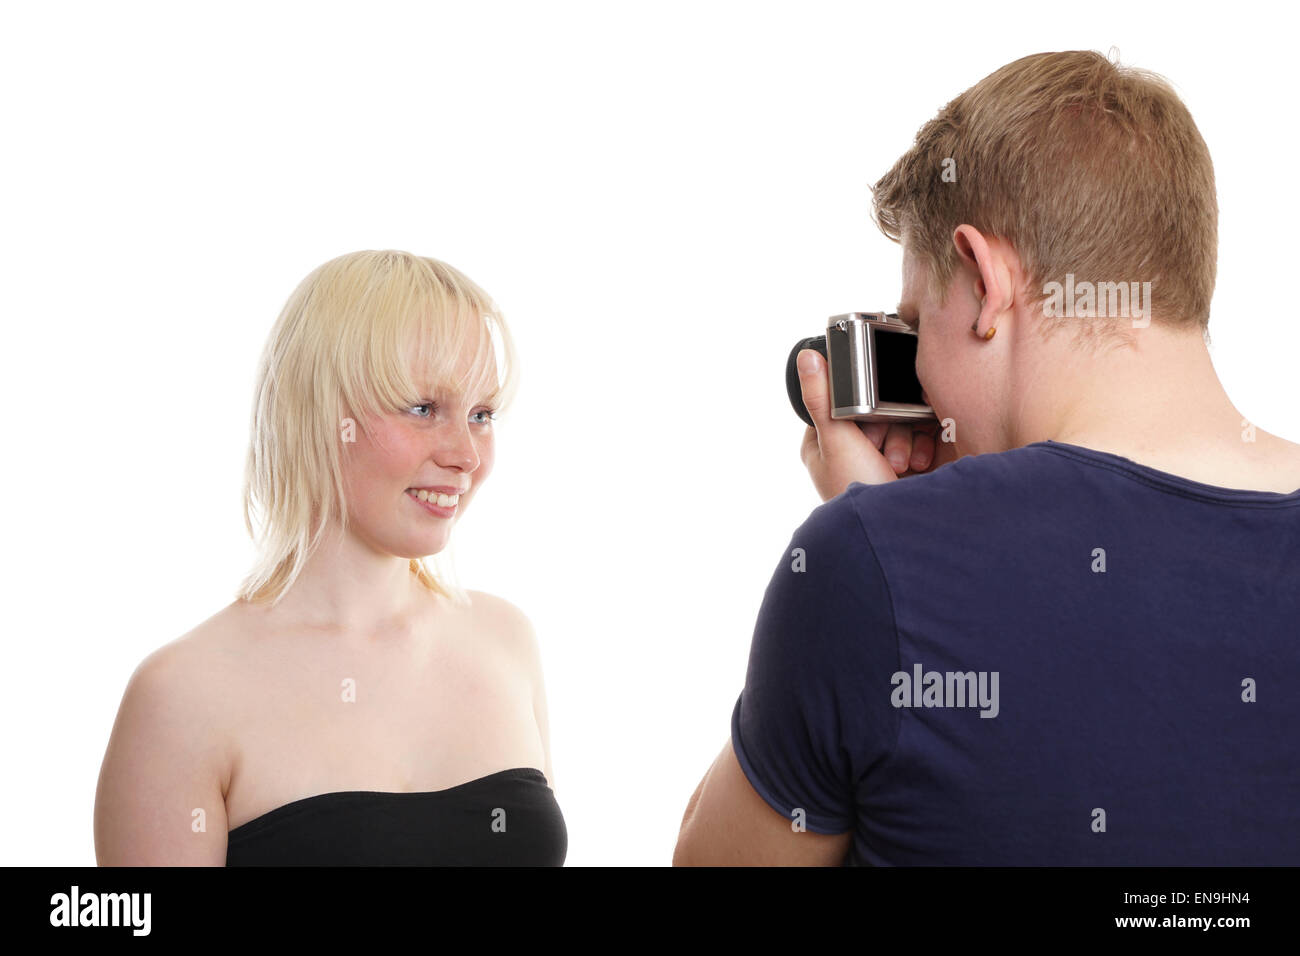 guy photographing girl Stock Photo